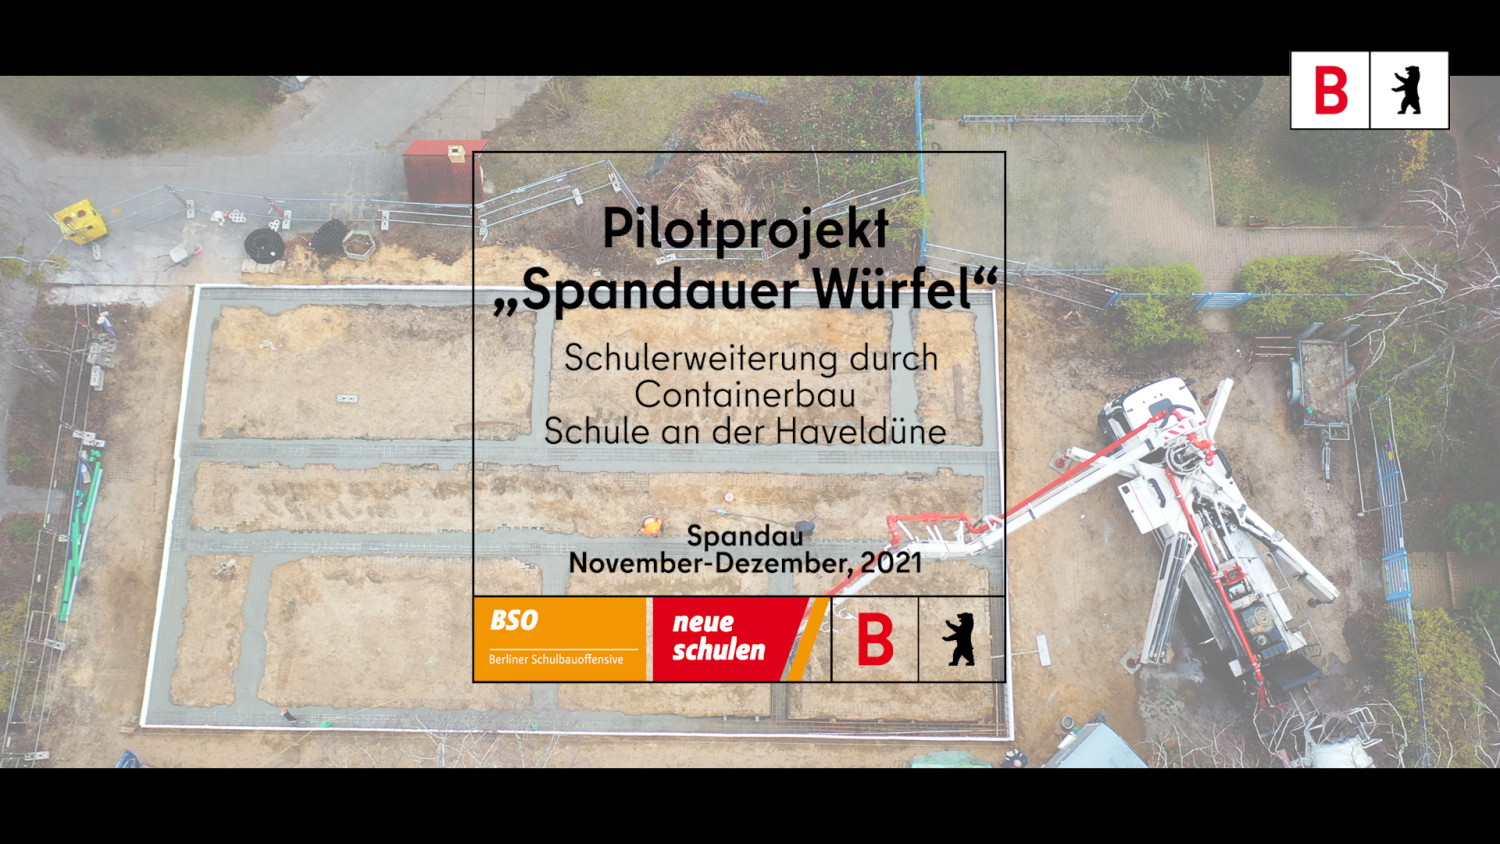 Spandauer_Würfel_Video1_Thumbnail